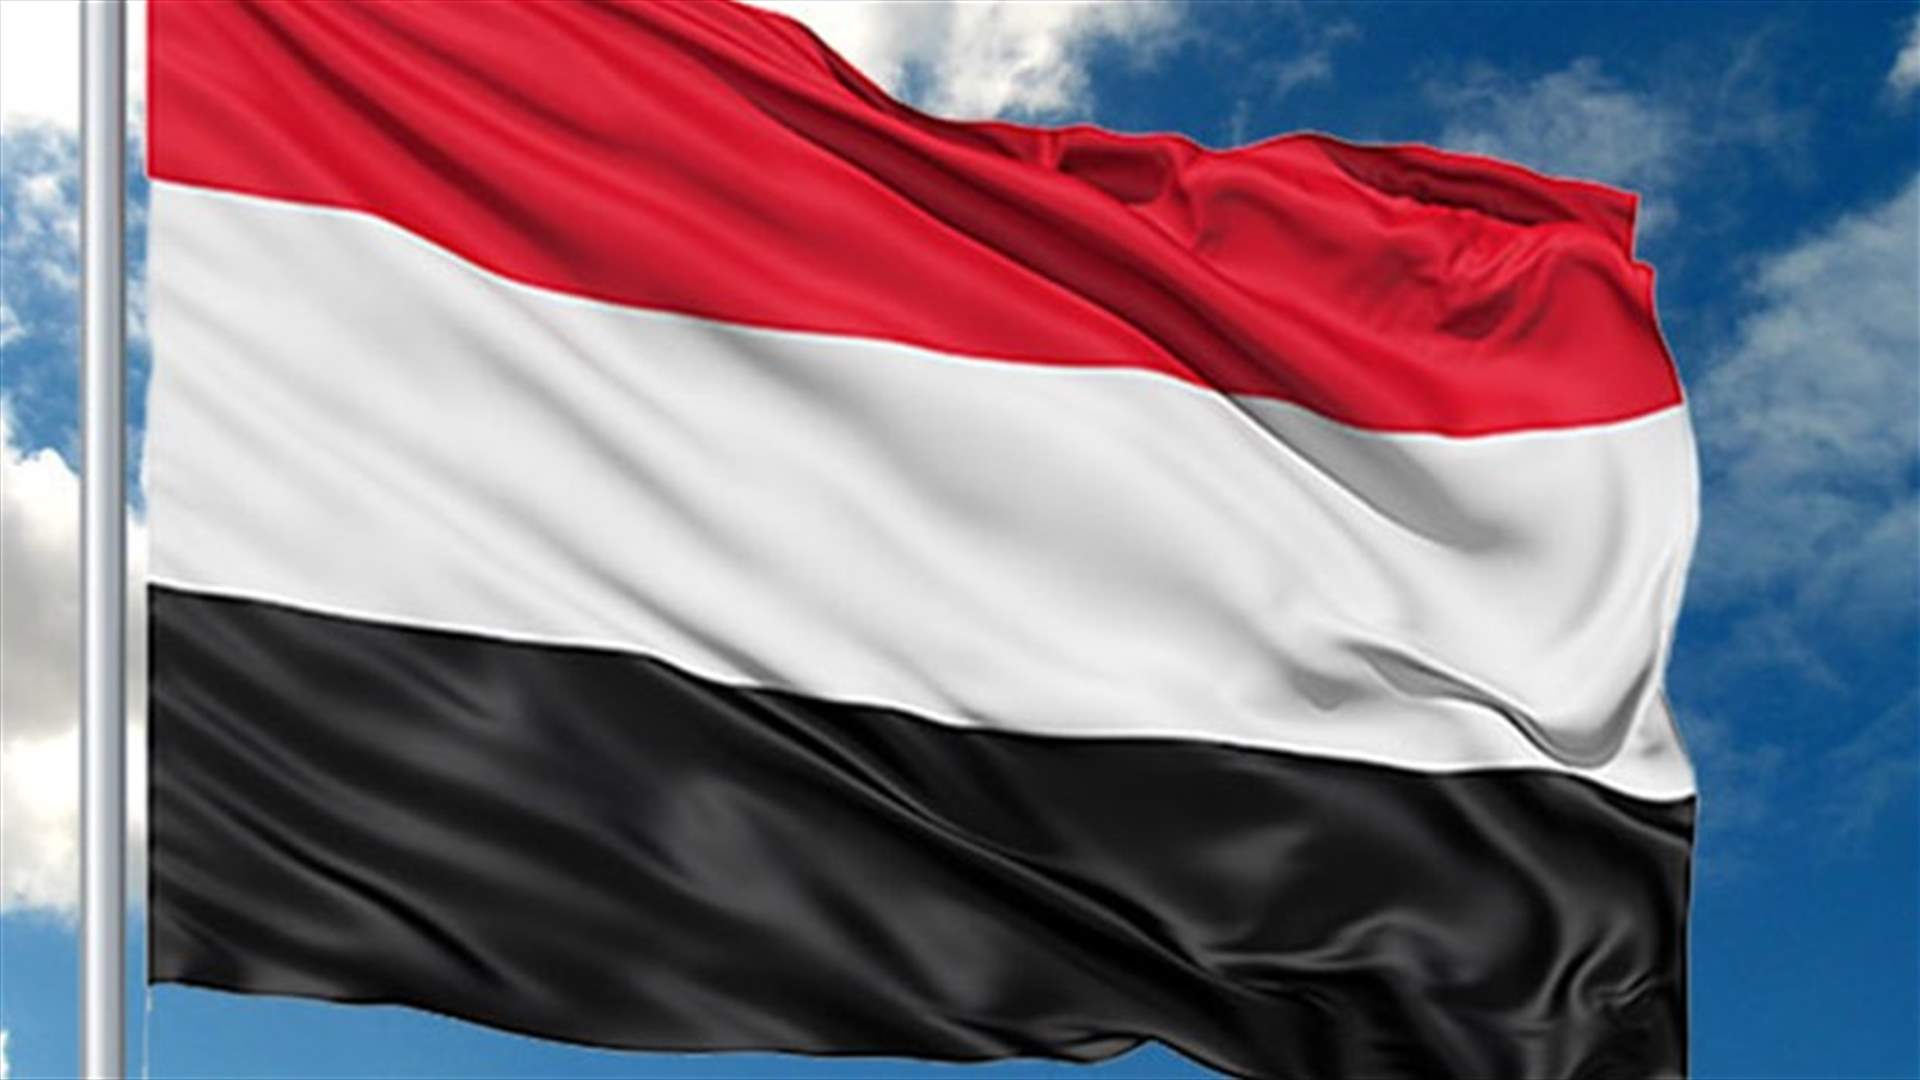 Suicide bomb kills 7 in Yemeni city of Marib - police sources